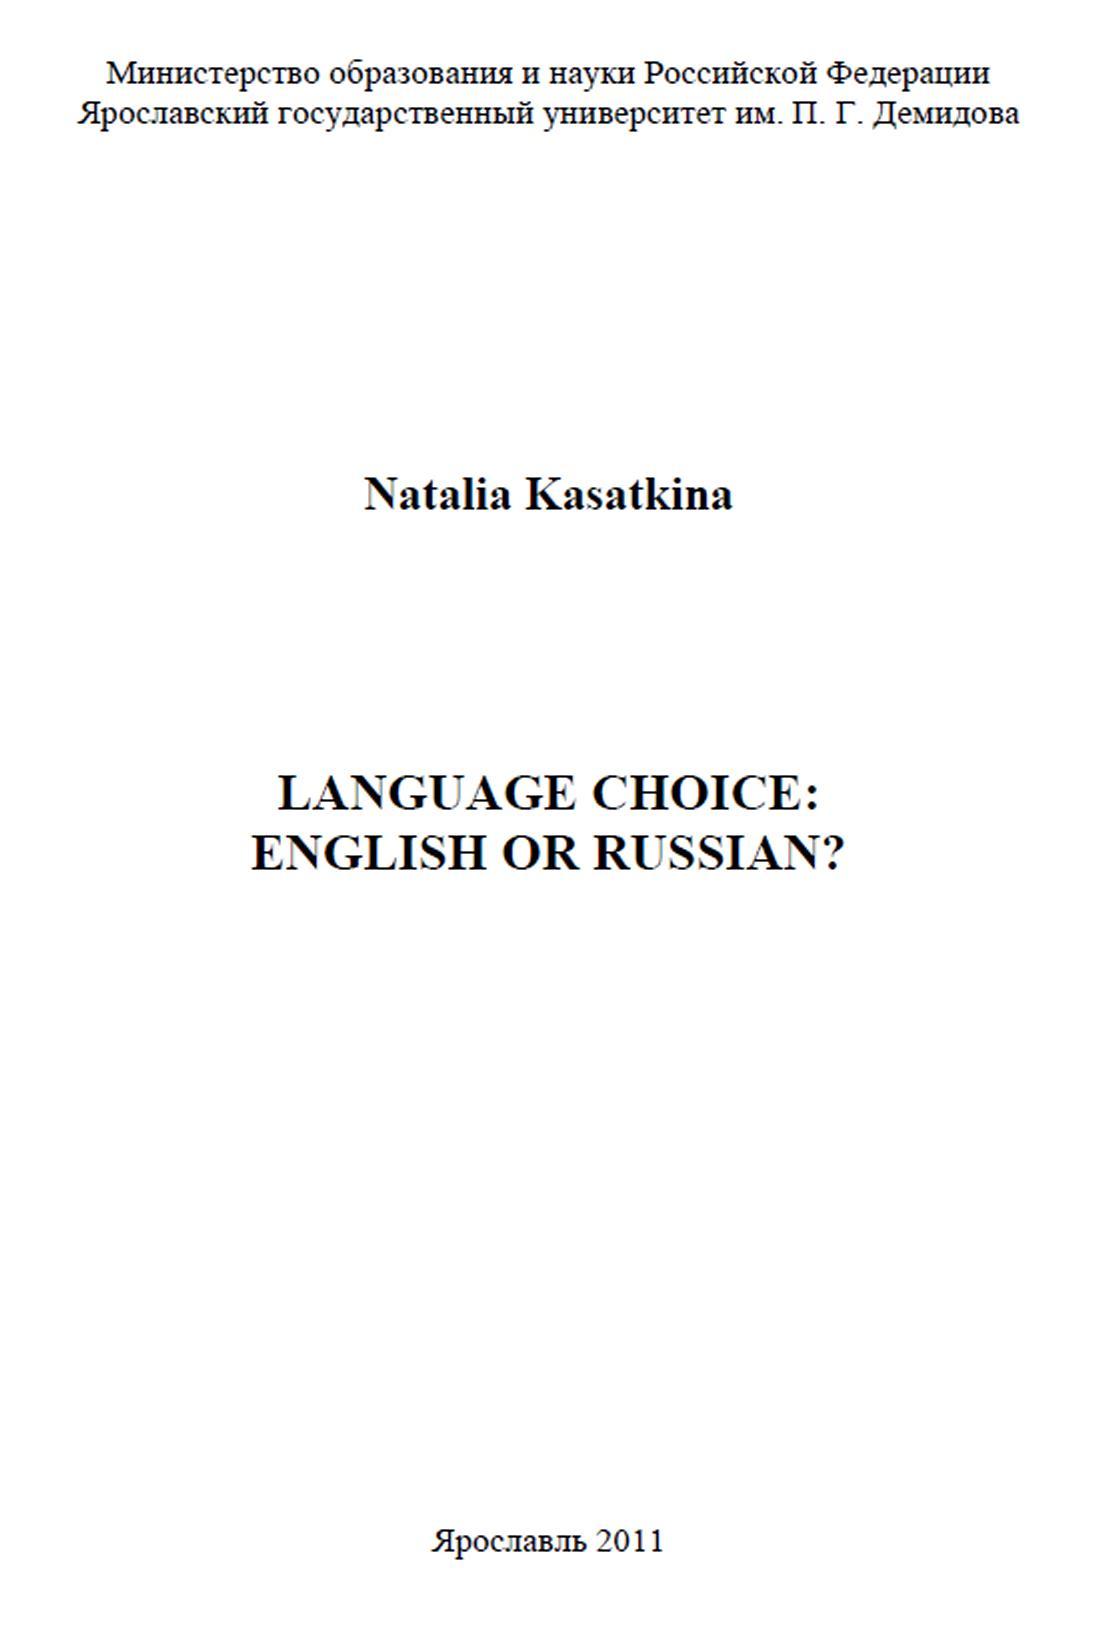 LANGUAGE CHOICE, ENGLISH OR RUSSIAN, Kasatkina N., Demidov Y., 2011